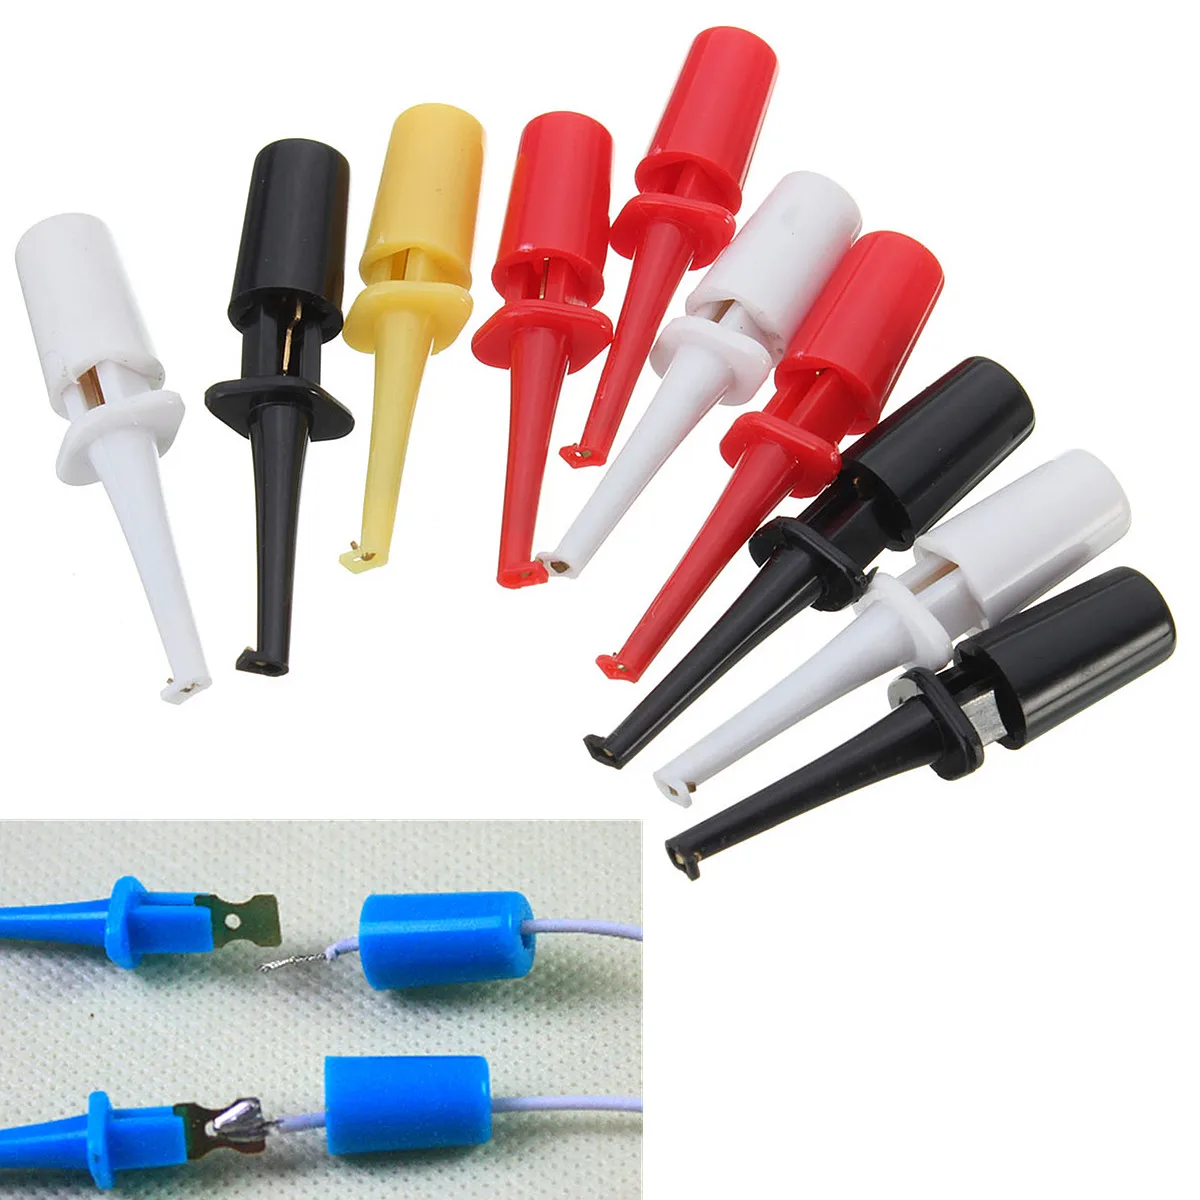 Details about   10x Multimeter Lead Wire Kit Test Hook Clip Grabbers SMD SMT Probe Test C5O4 